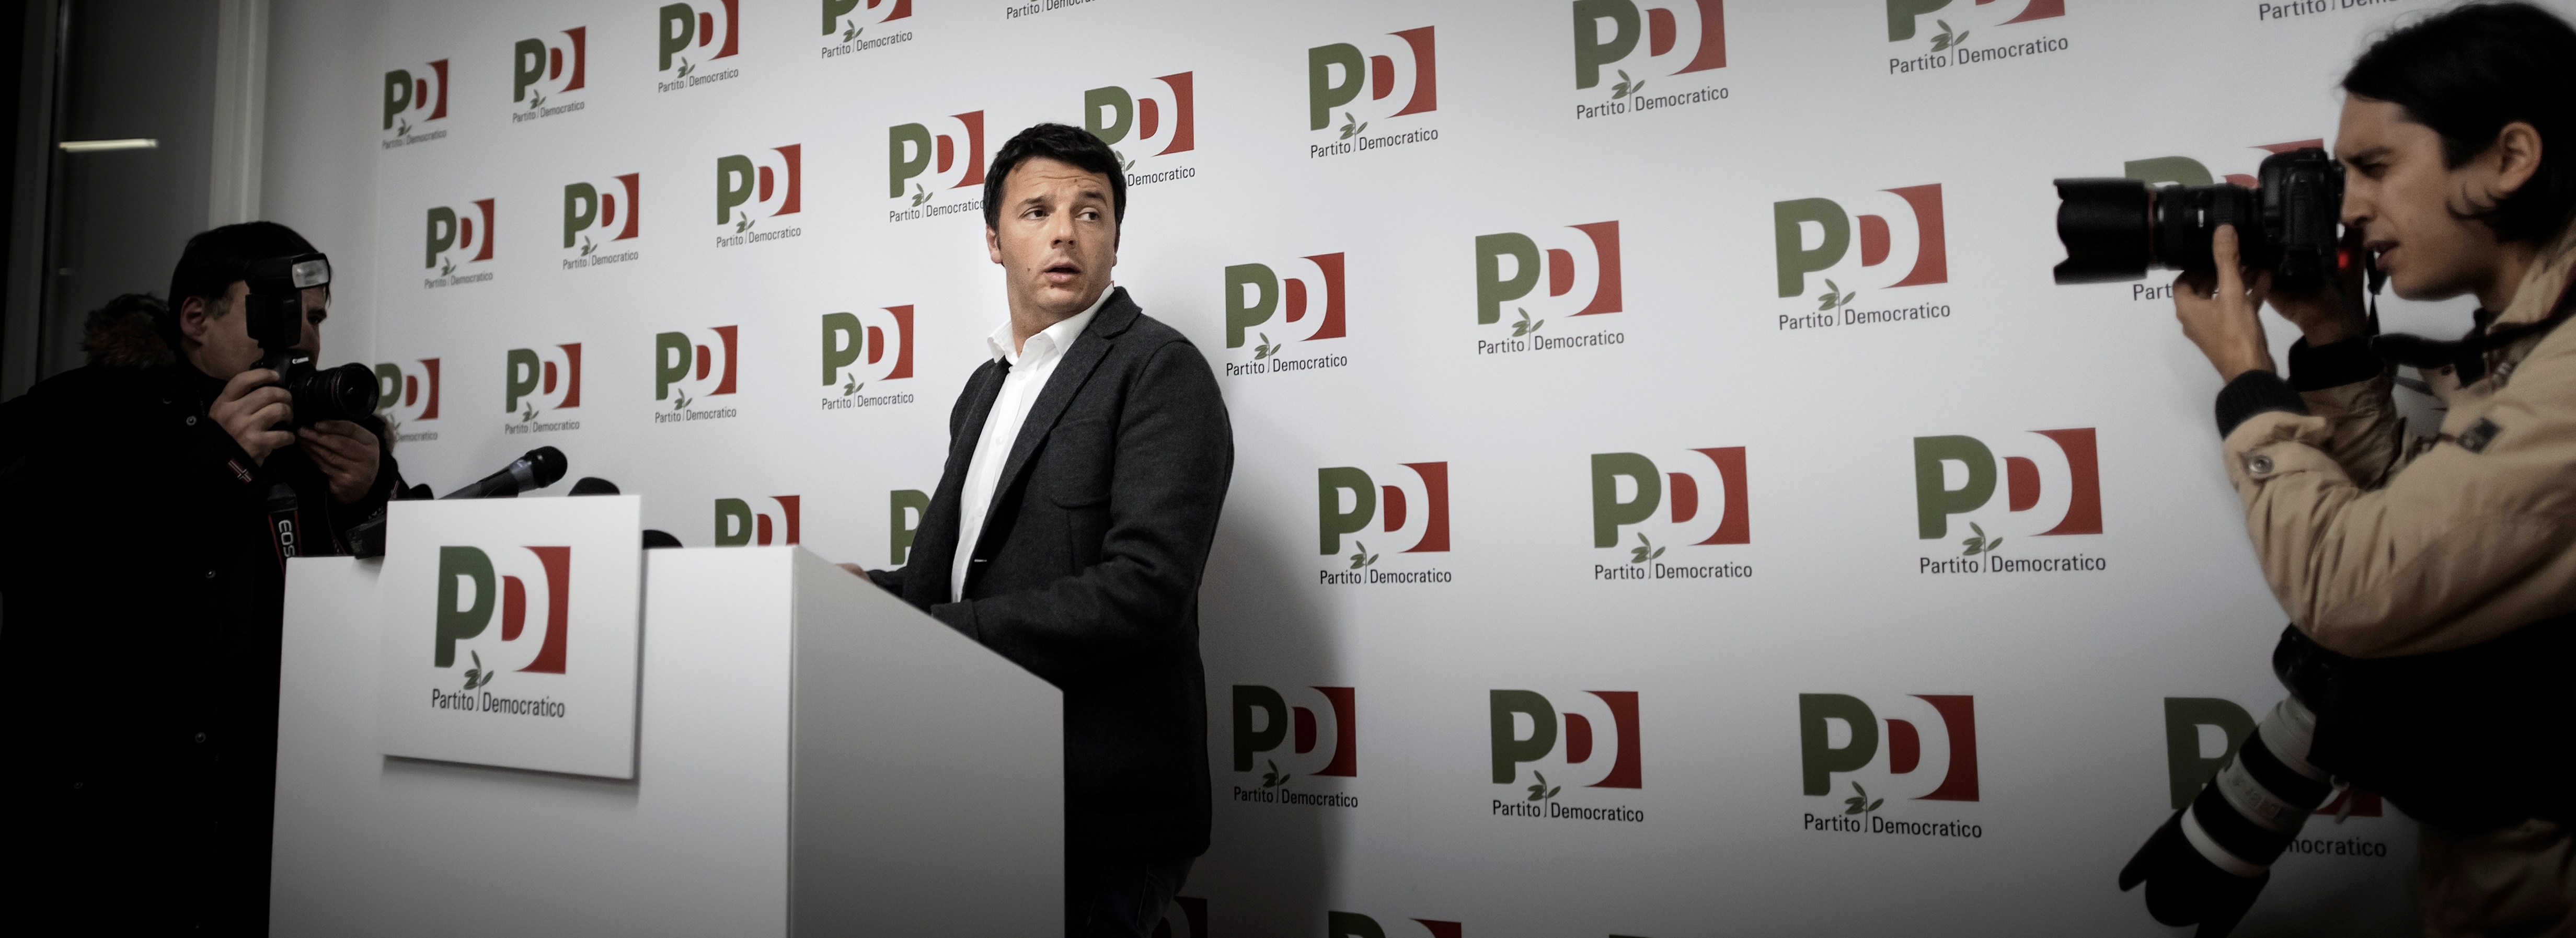 Matteo Renzi alla direzione nazionale Pd